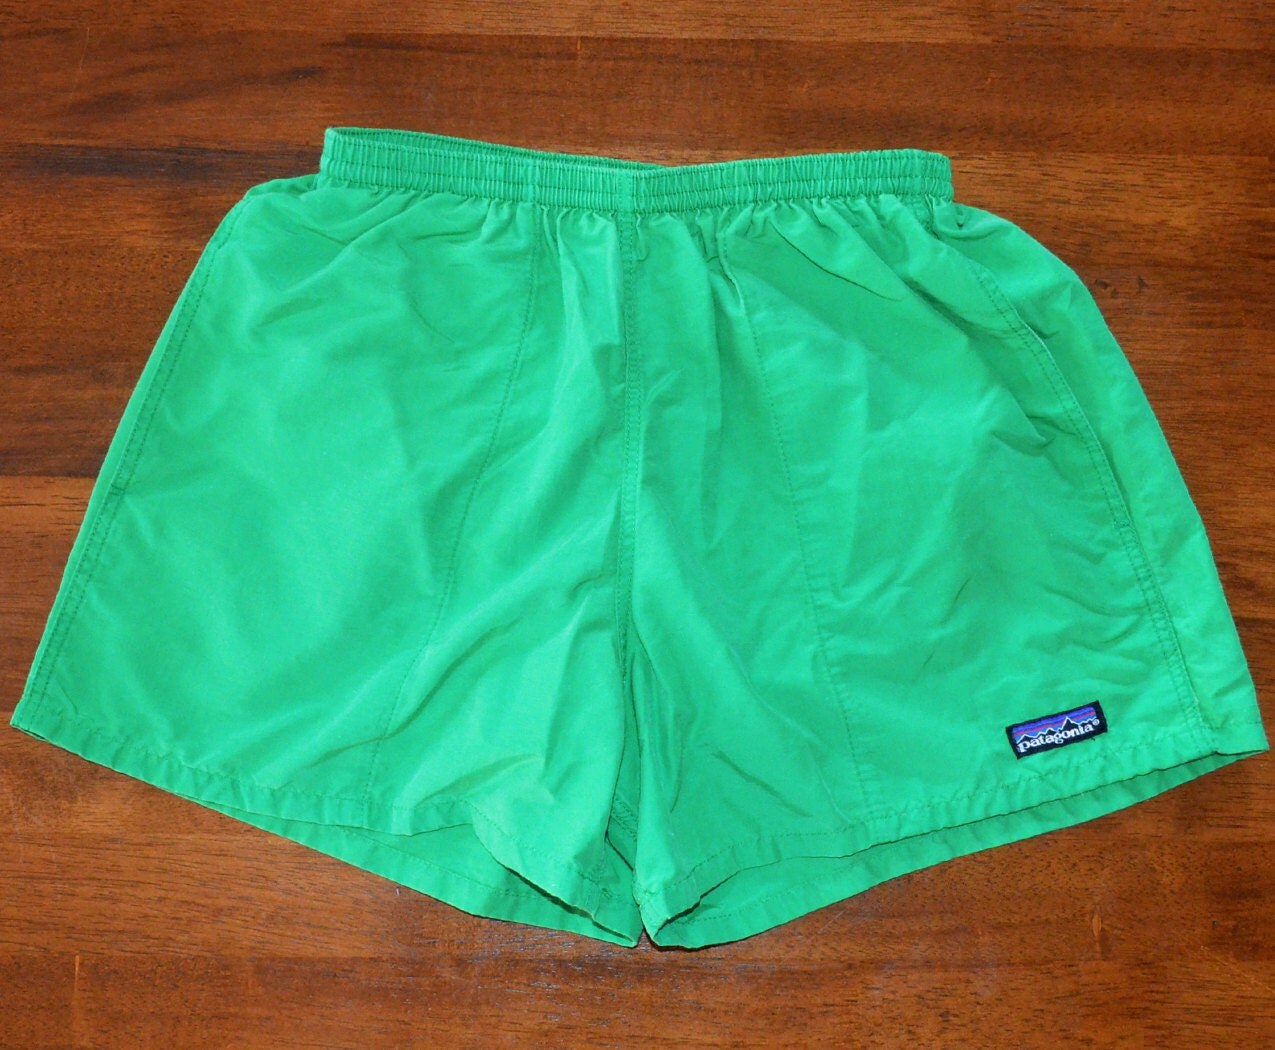 vintage 80s PATAGONIA baggies shorts bathing suit swim trunks